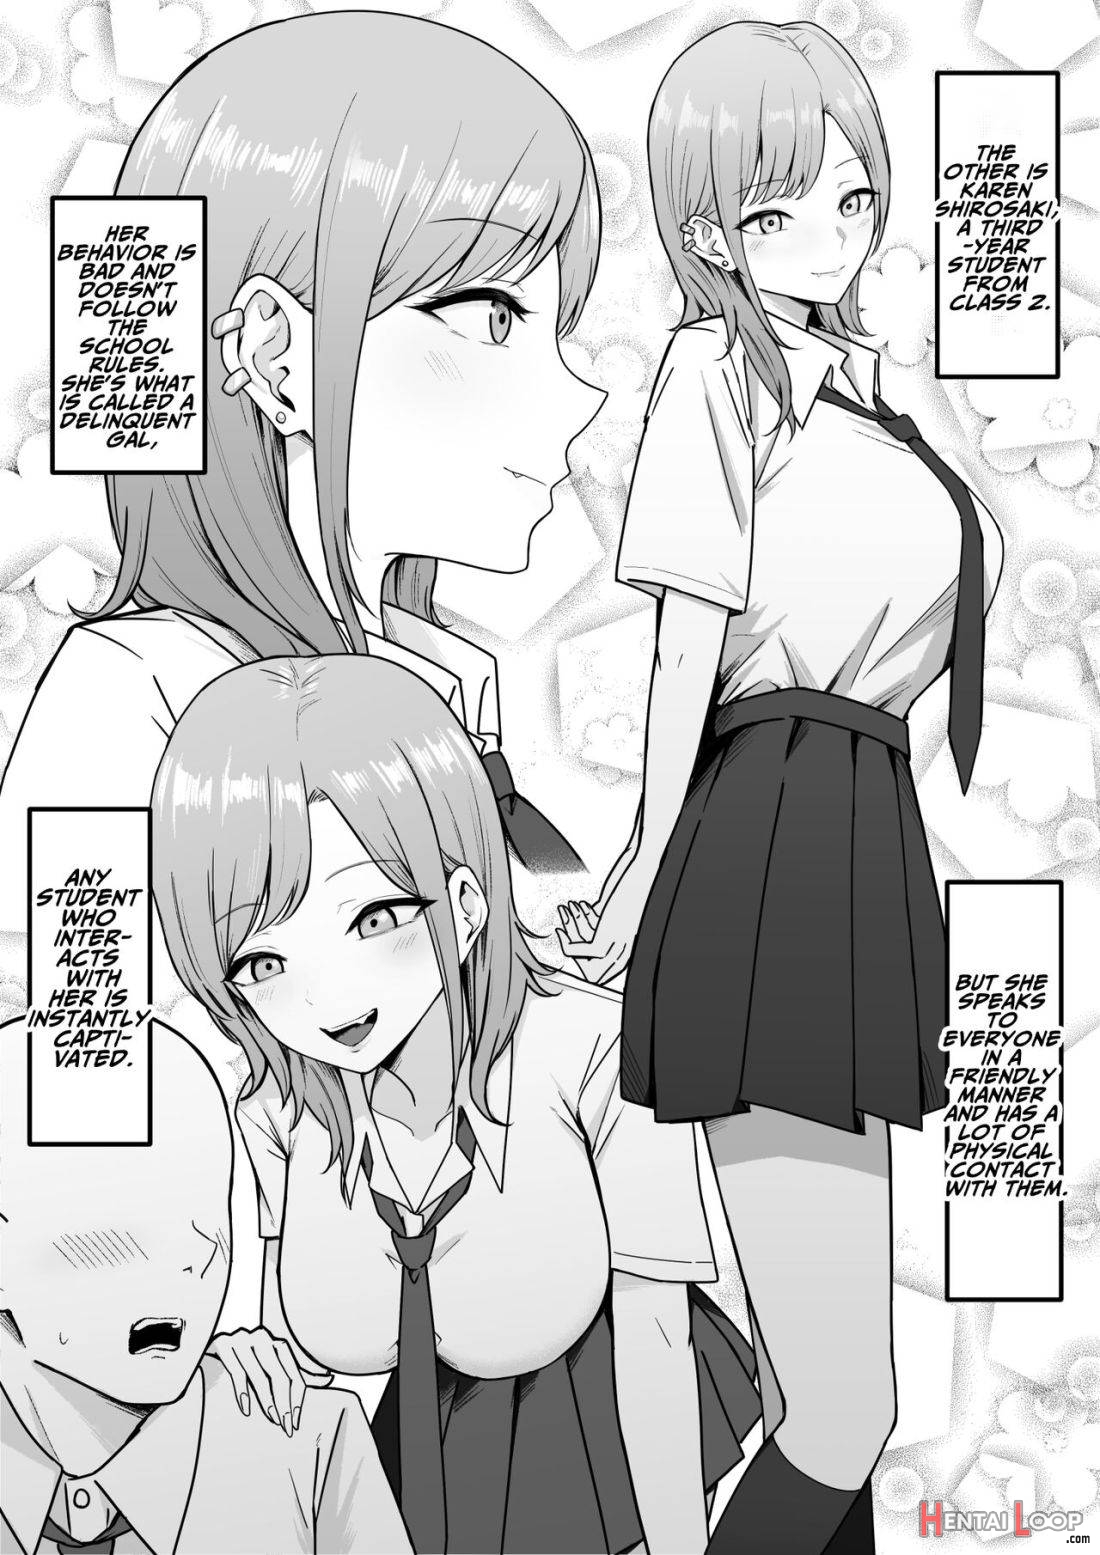 Lewd Students ~the Temptations Of Kuromine & Shirosaki~ page 5